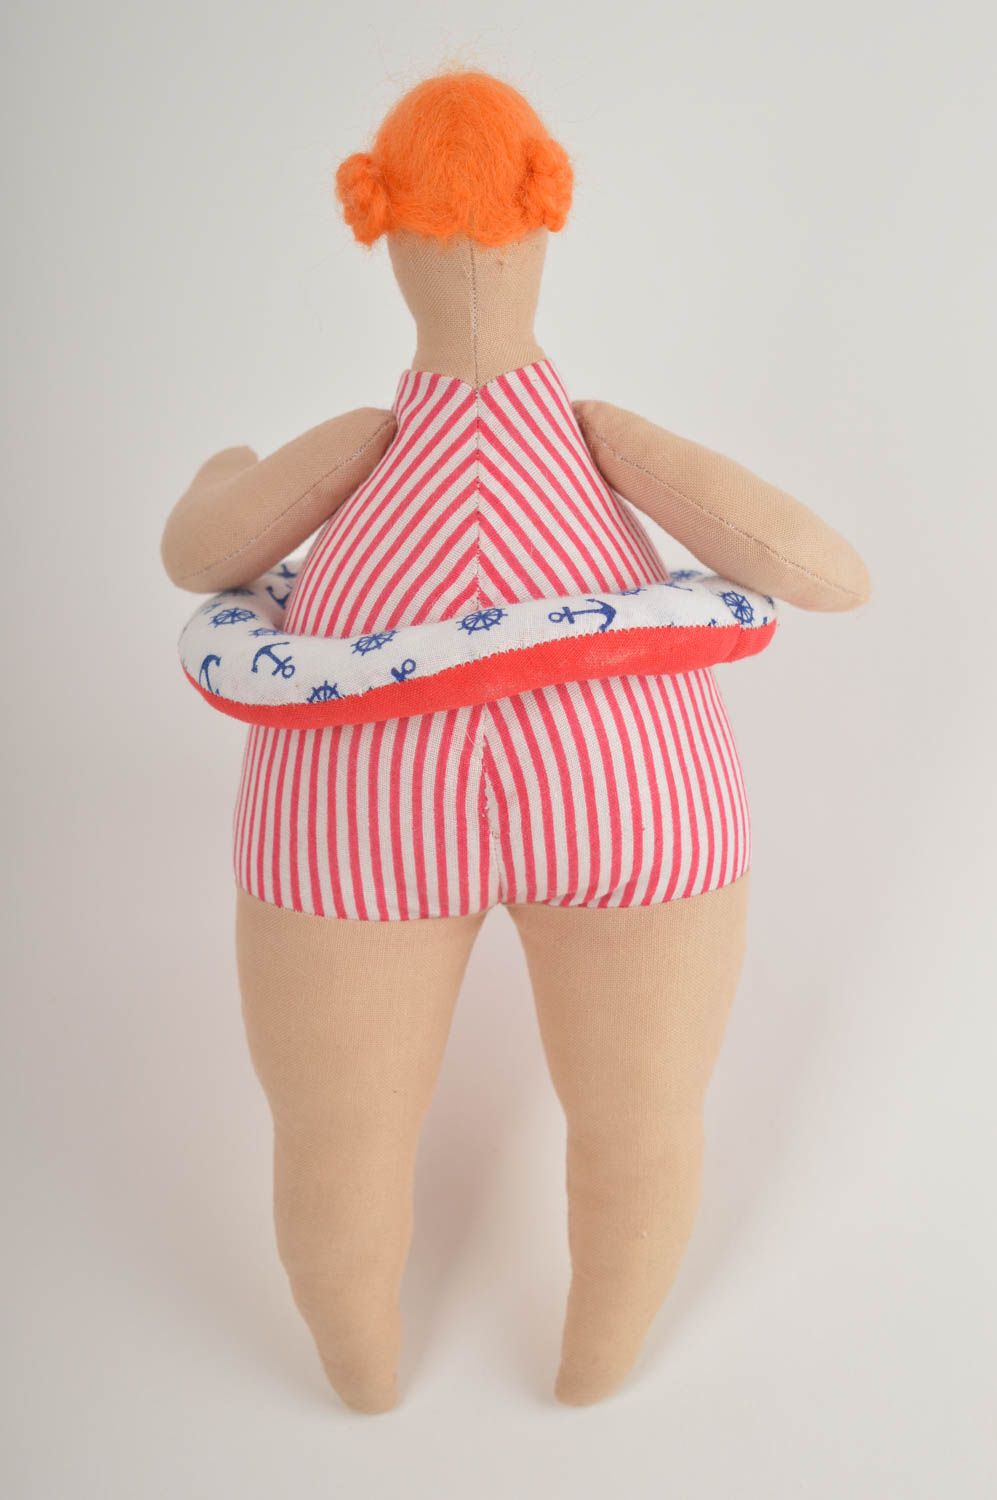 Handmade toy unusual toy for girls gift ideas nursery decor soft doll photo 3